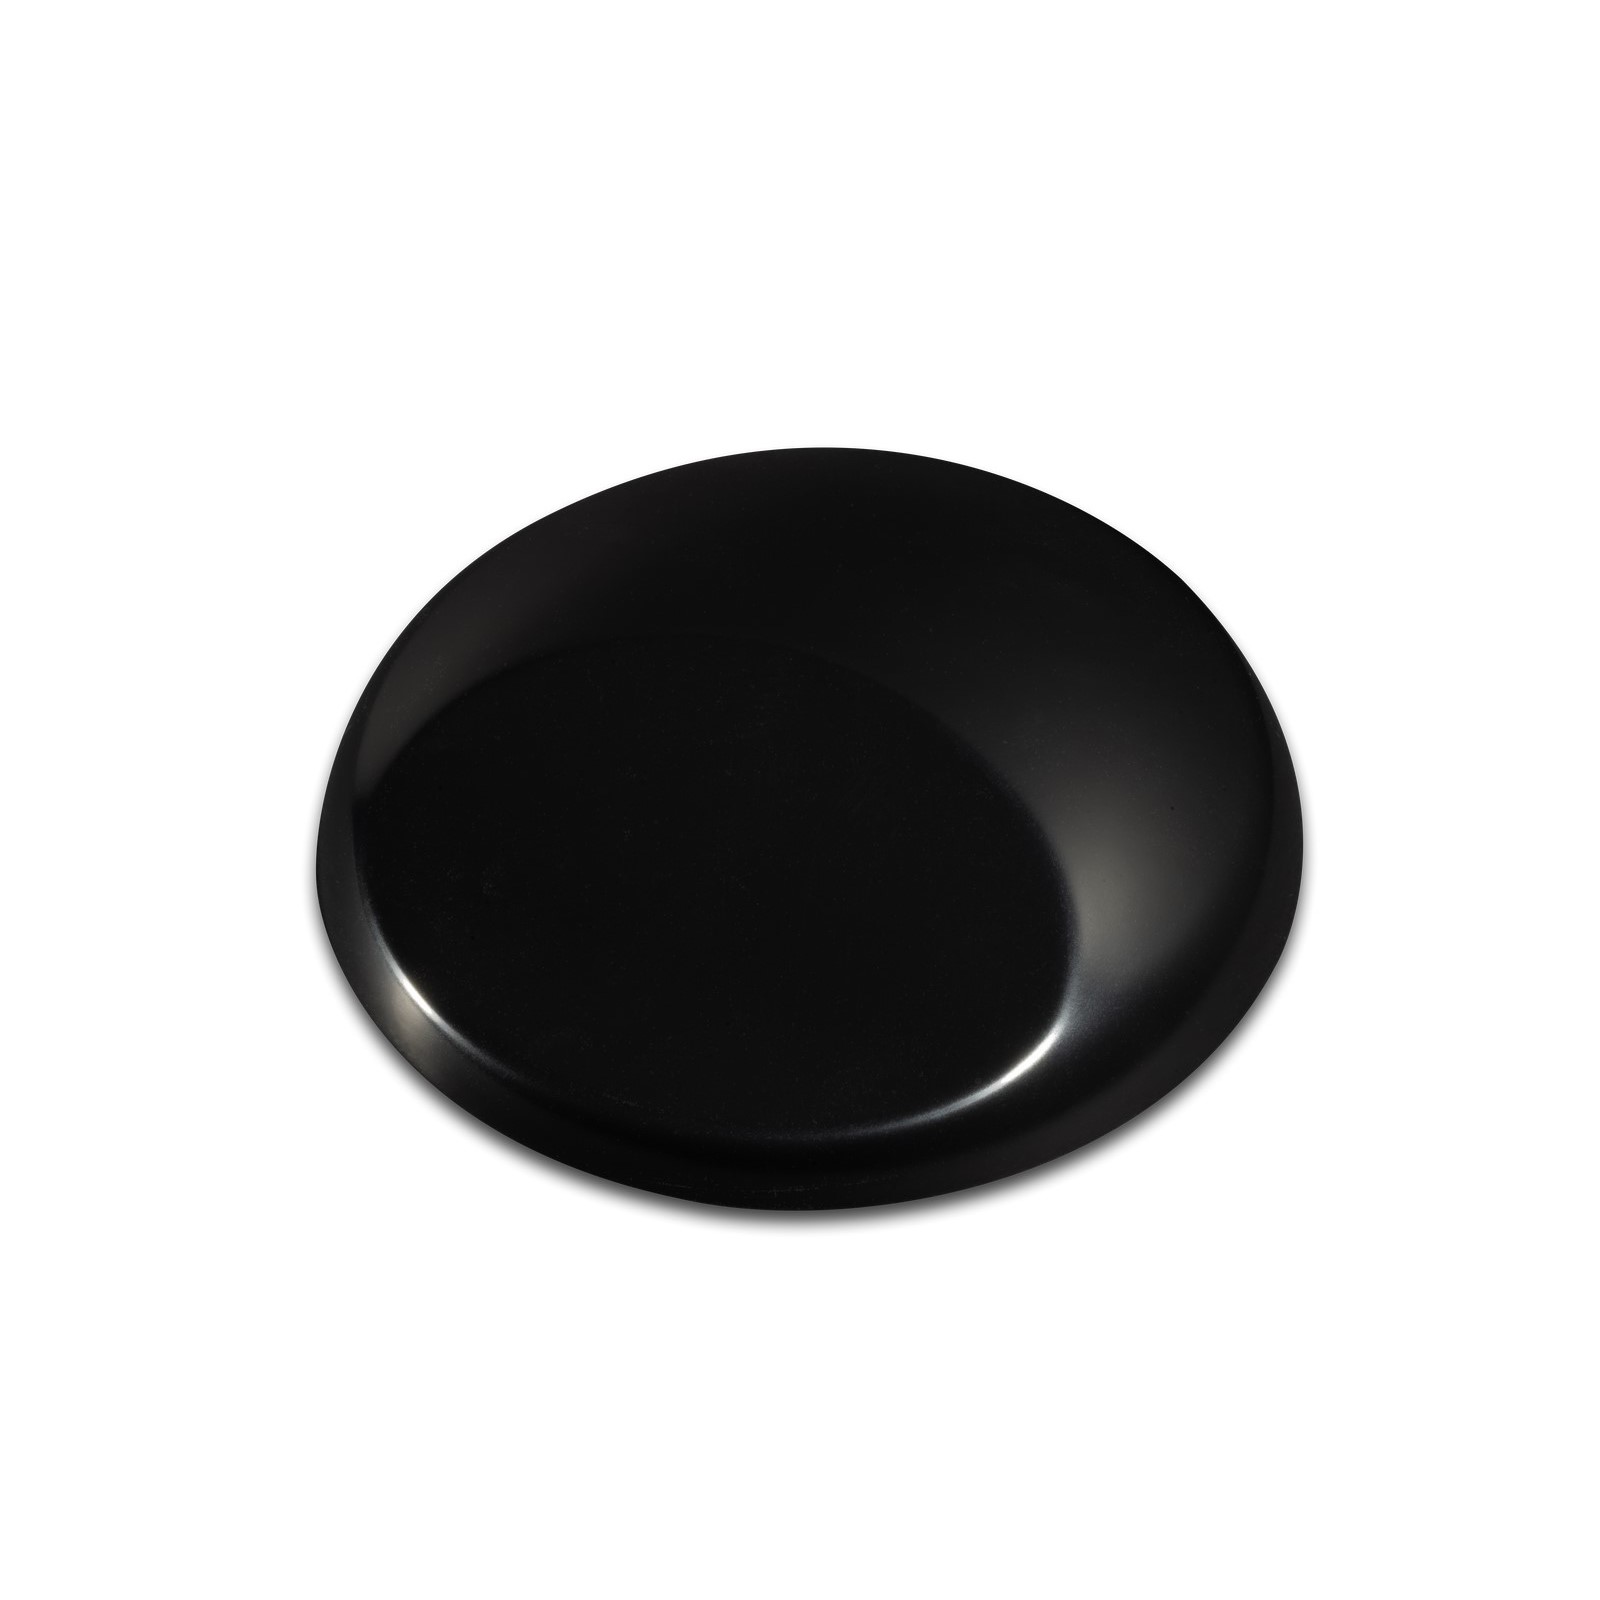 CREATEX AIRBRUSH Opaque Black 2oz. #5211 - TDI, Inc